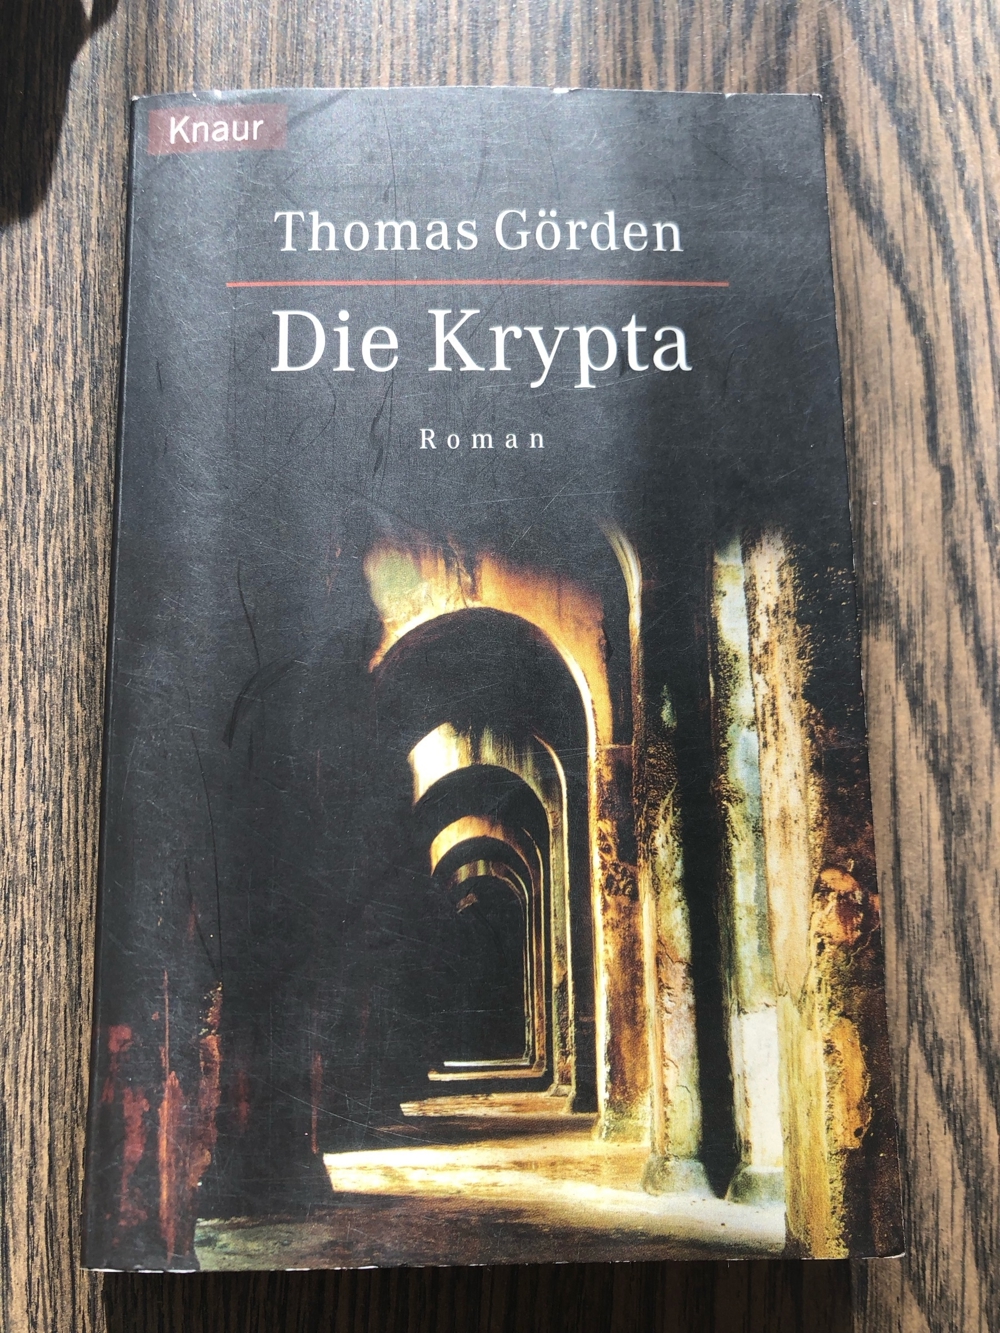 Die Krypta, Thomas Görden